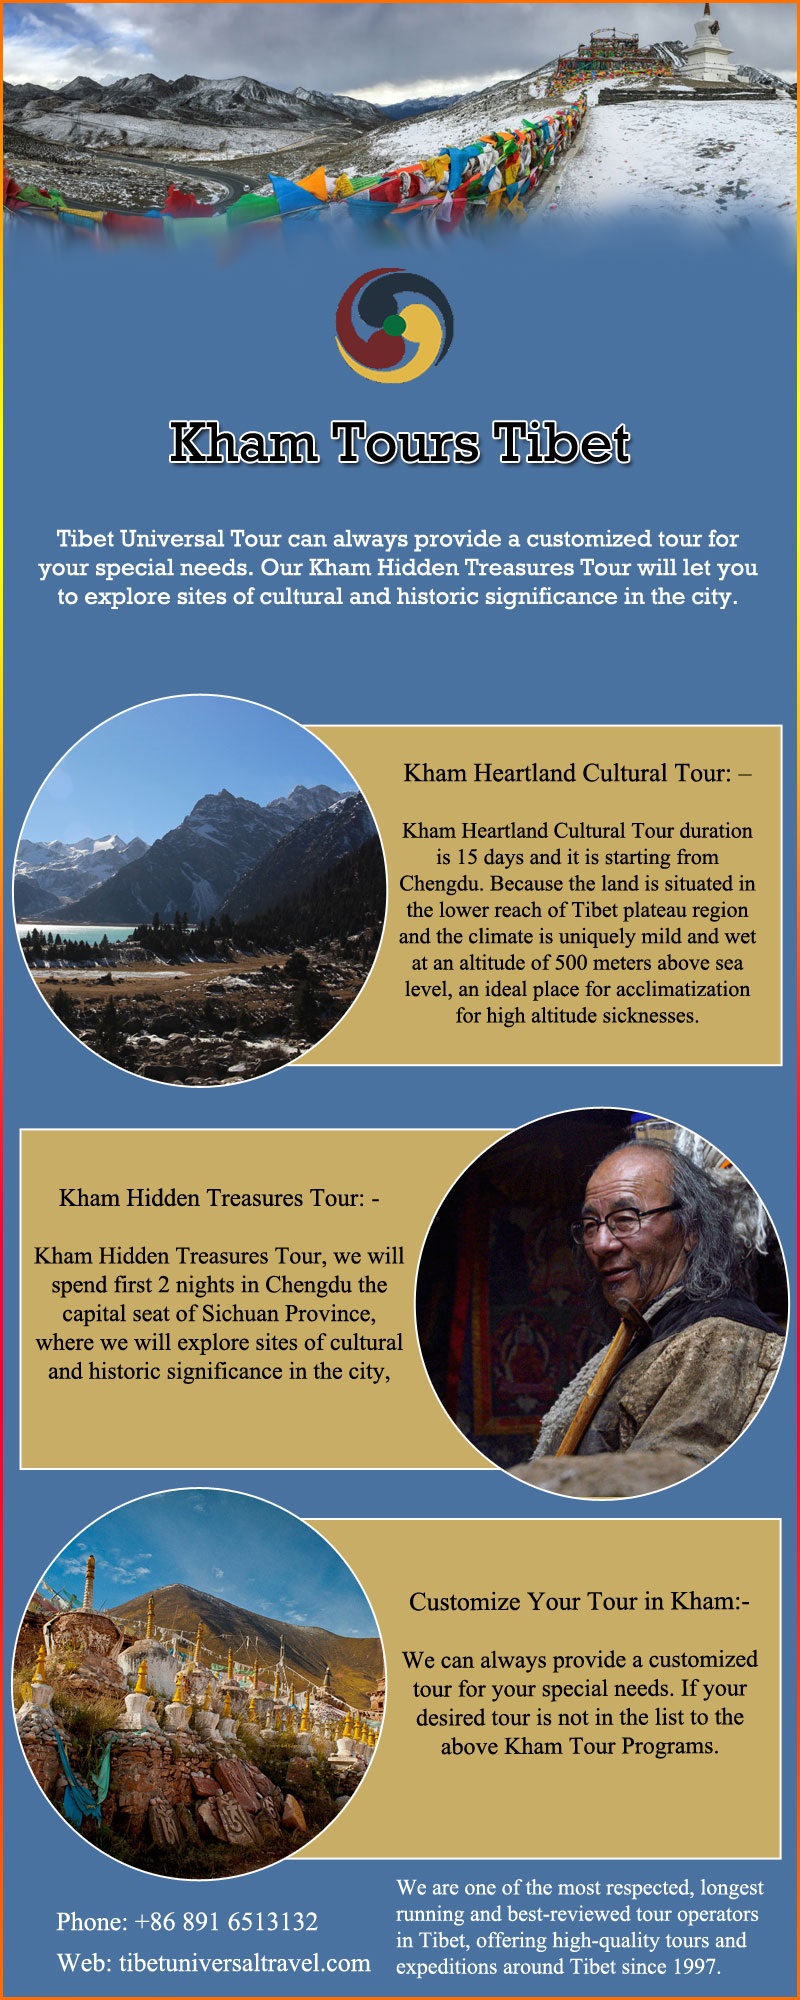 Kham Tours Tibet.jpg  by tibettravelchina